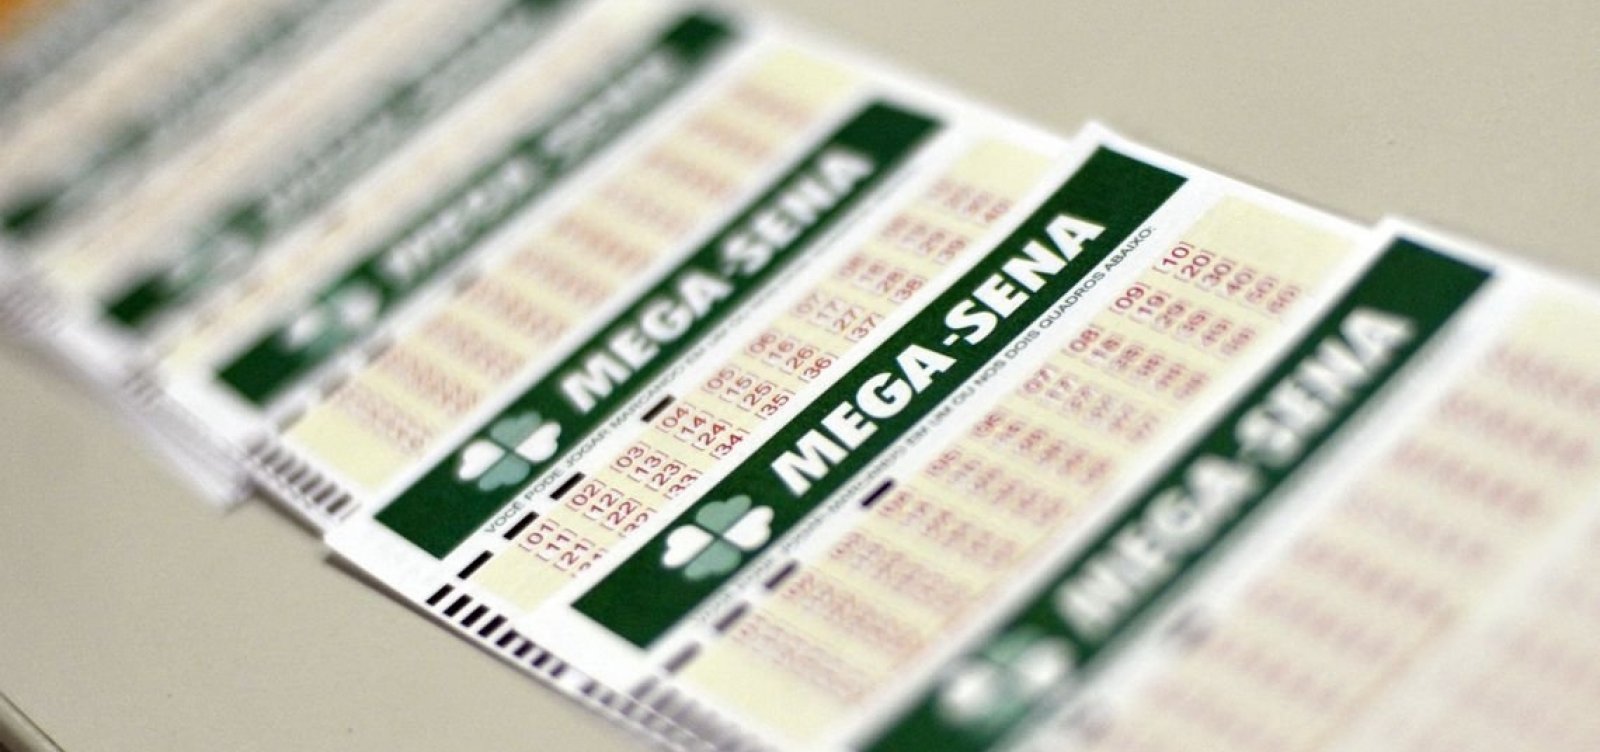 Mega-Sena sorteia R$ 3 milhões neste sábado 